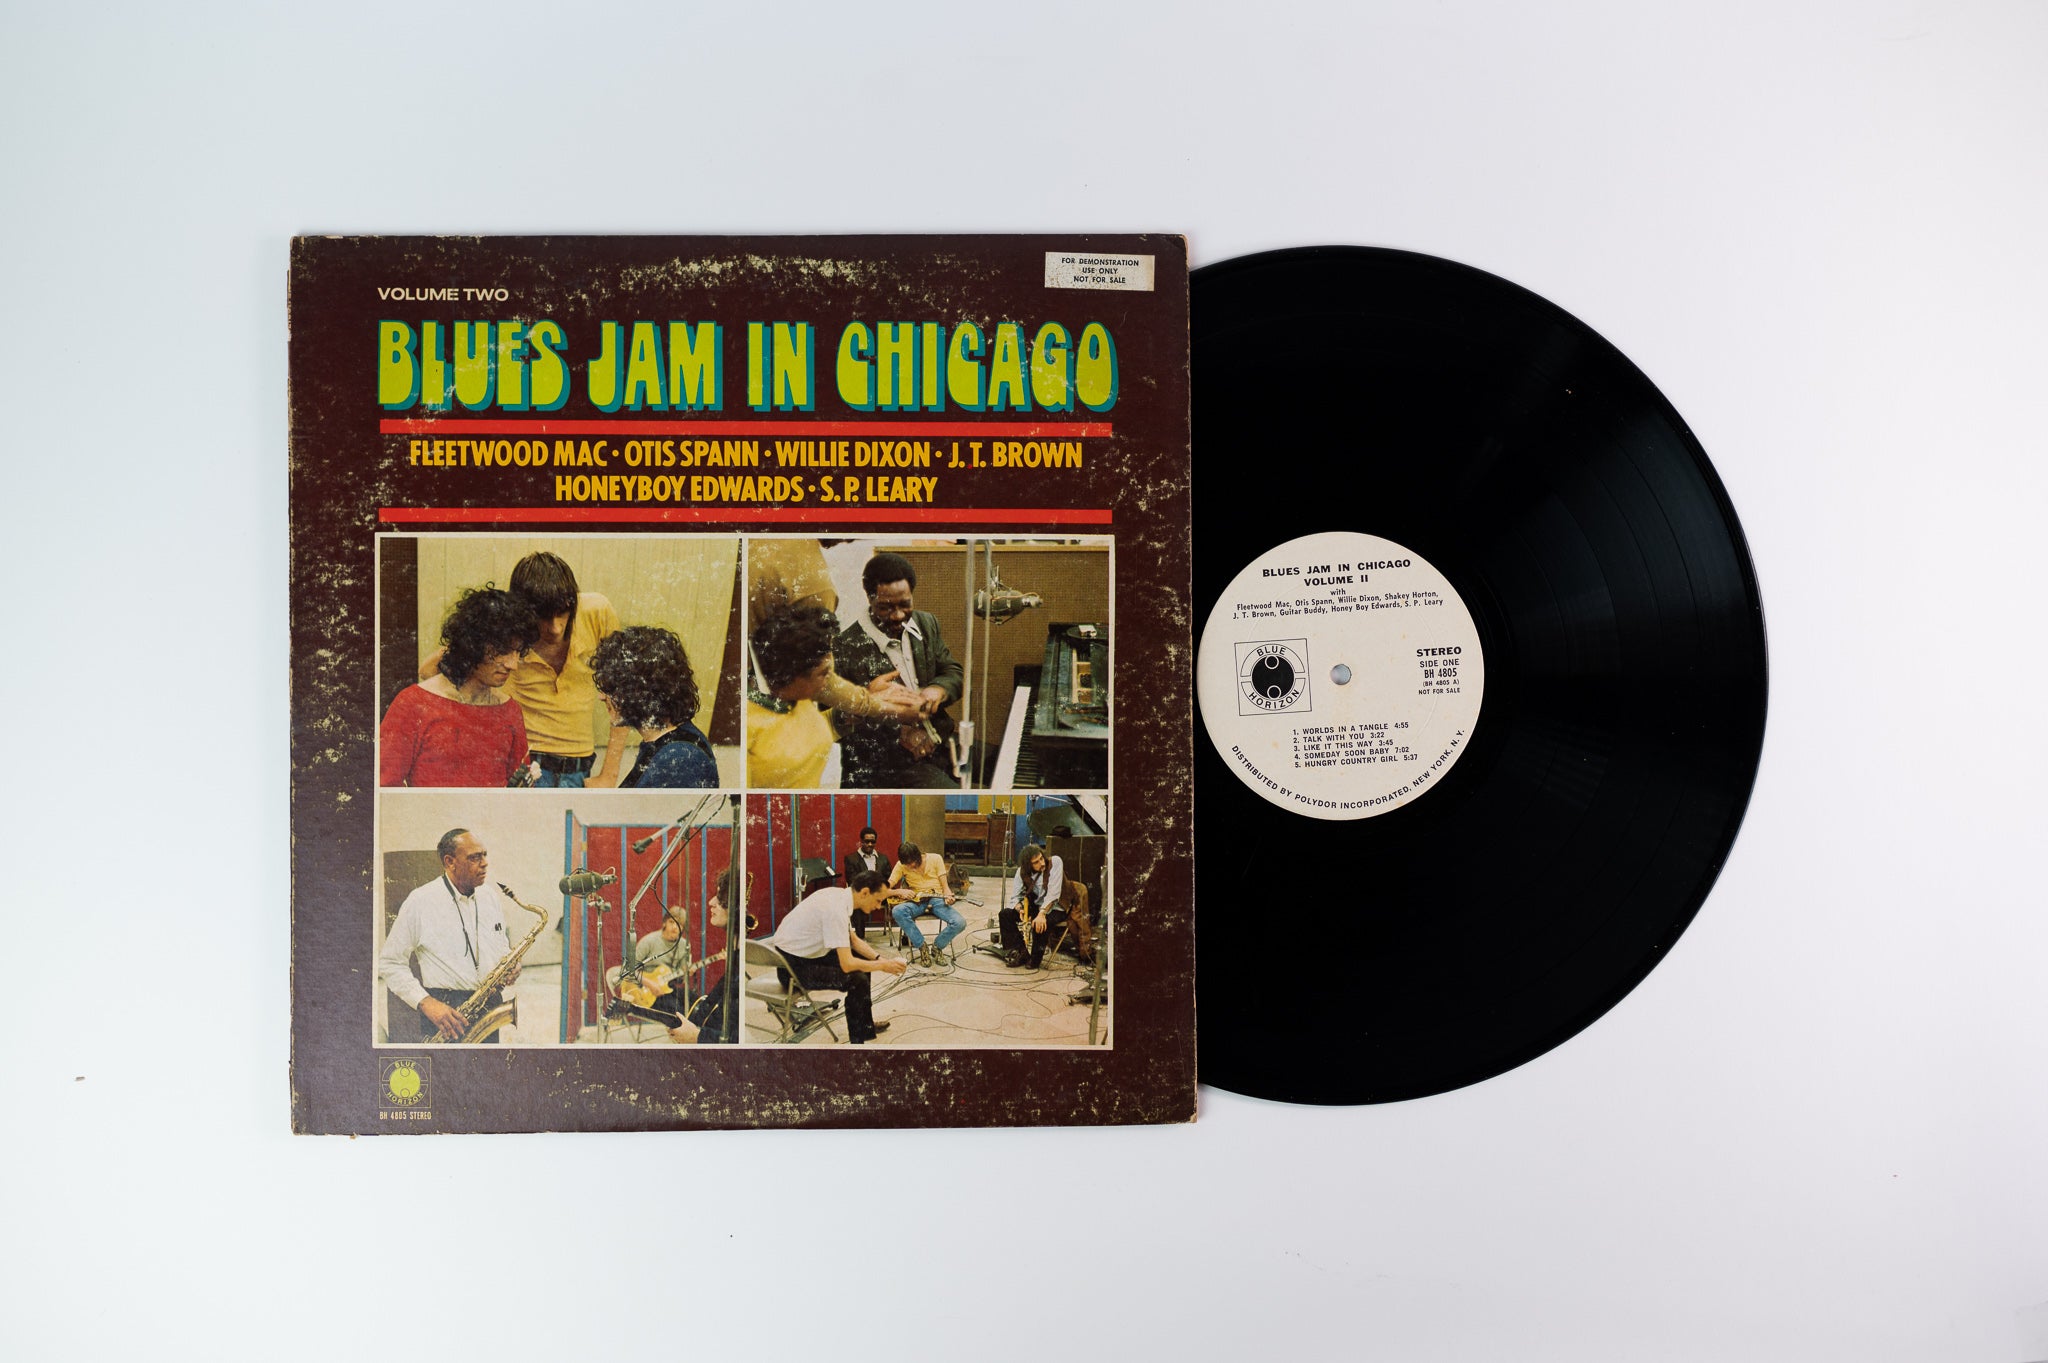 Fleetwood Mac - Blues Jam In Chicago - Volume Two on Blue Horizon Promo